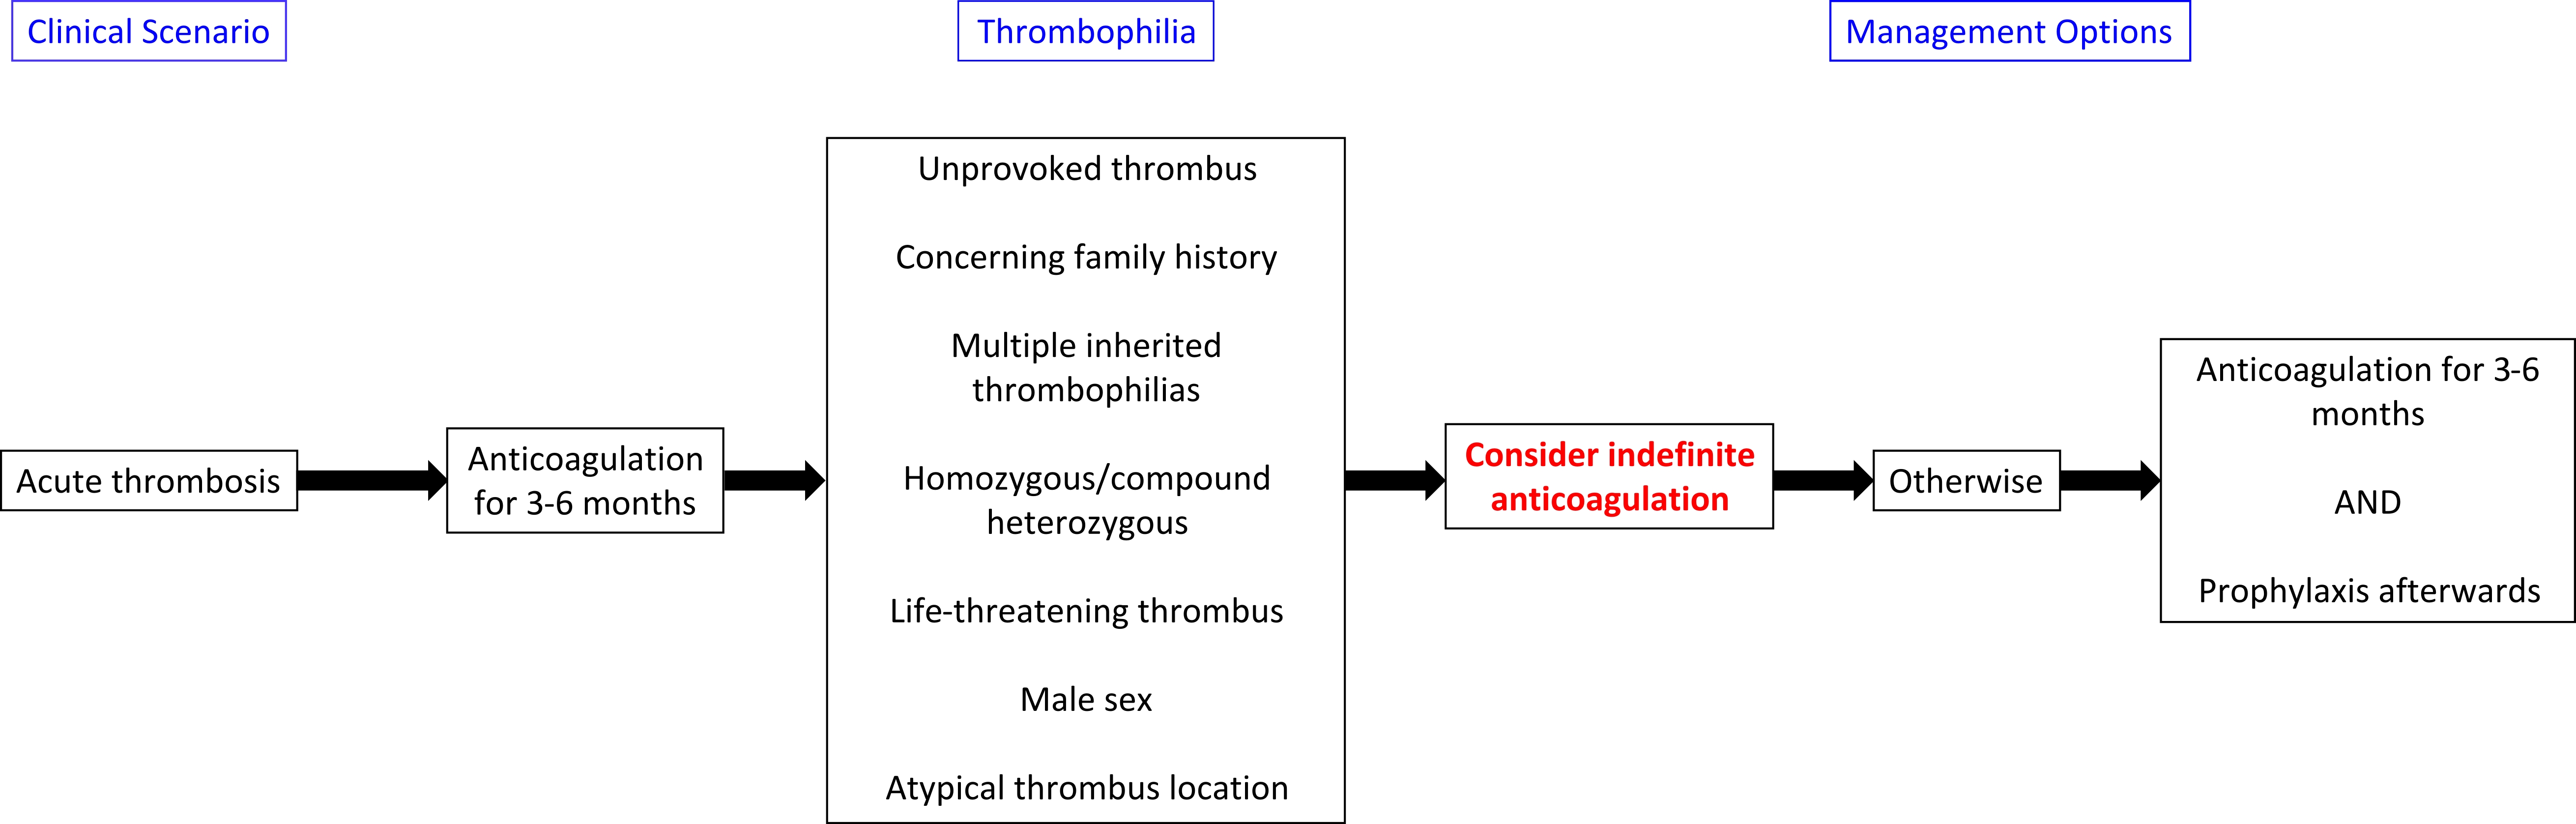 File:Thrombophilia Management Thrombosis.jpg